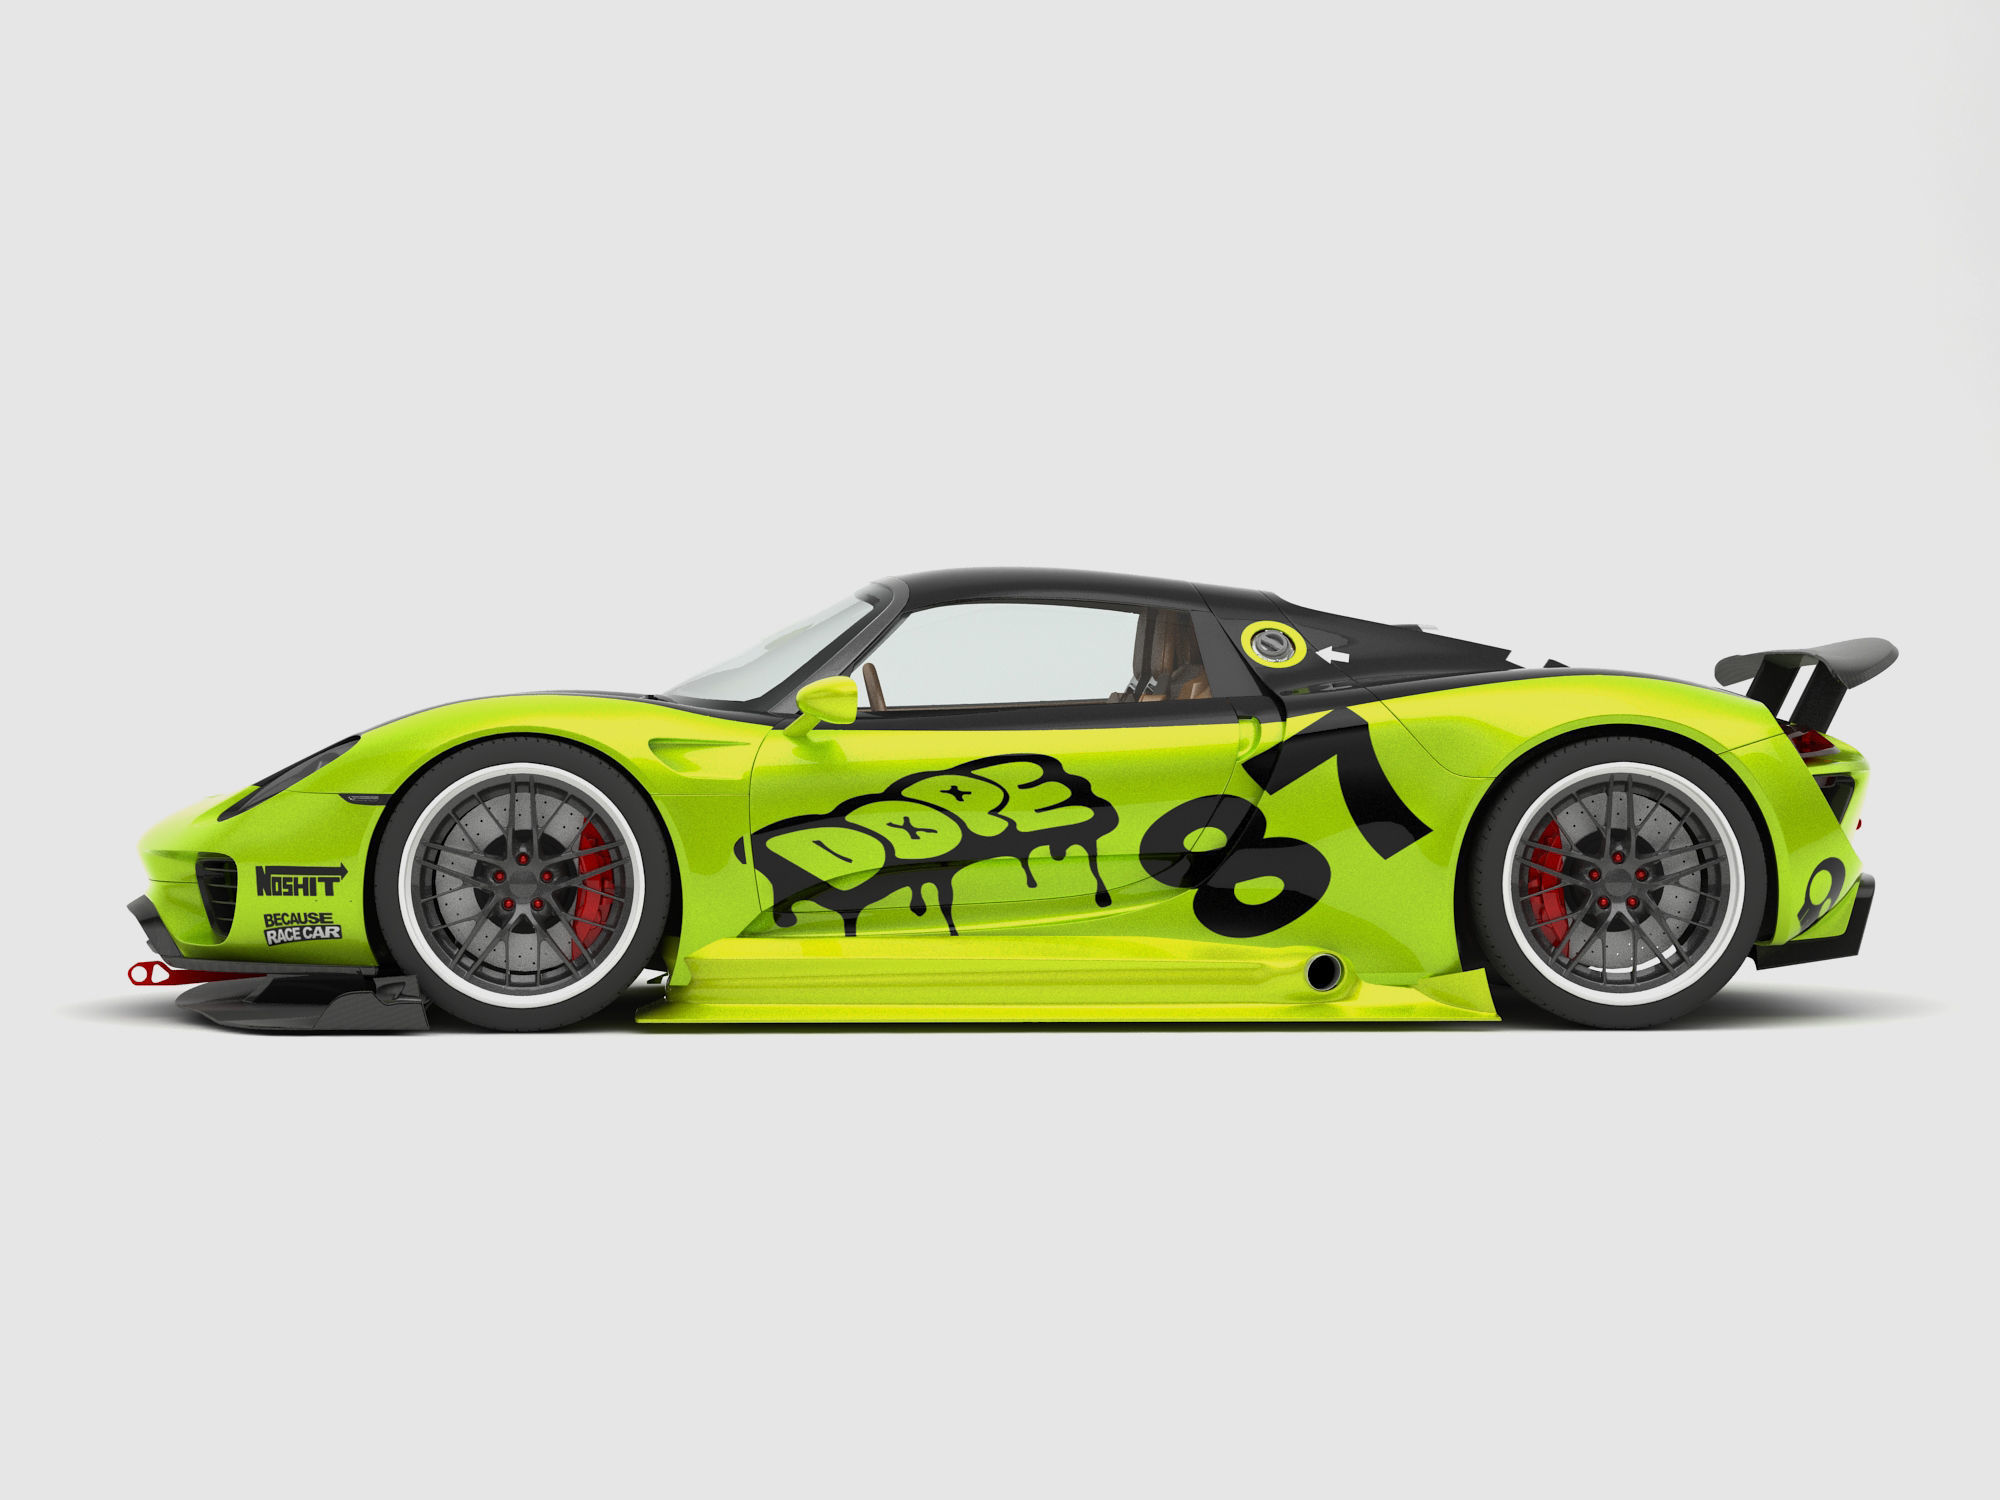 Chimera One Porsche 918 Street race concept